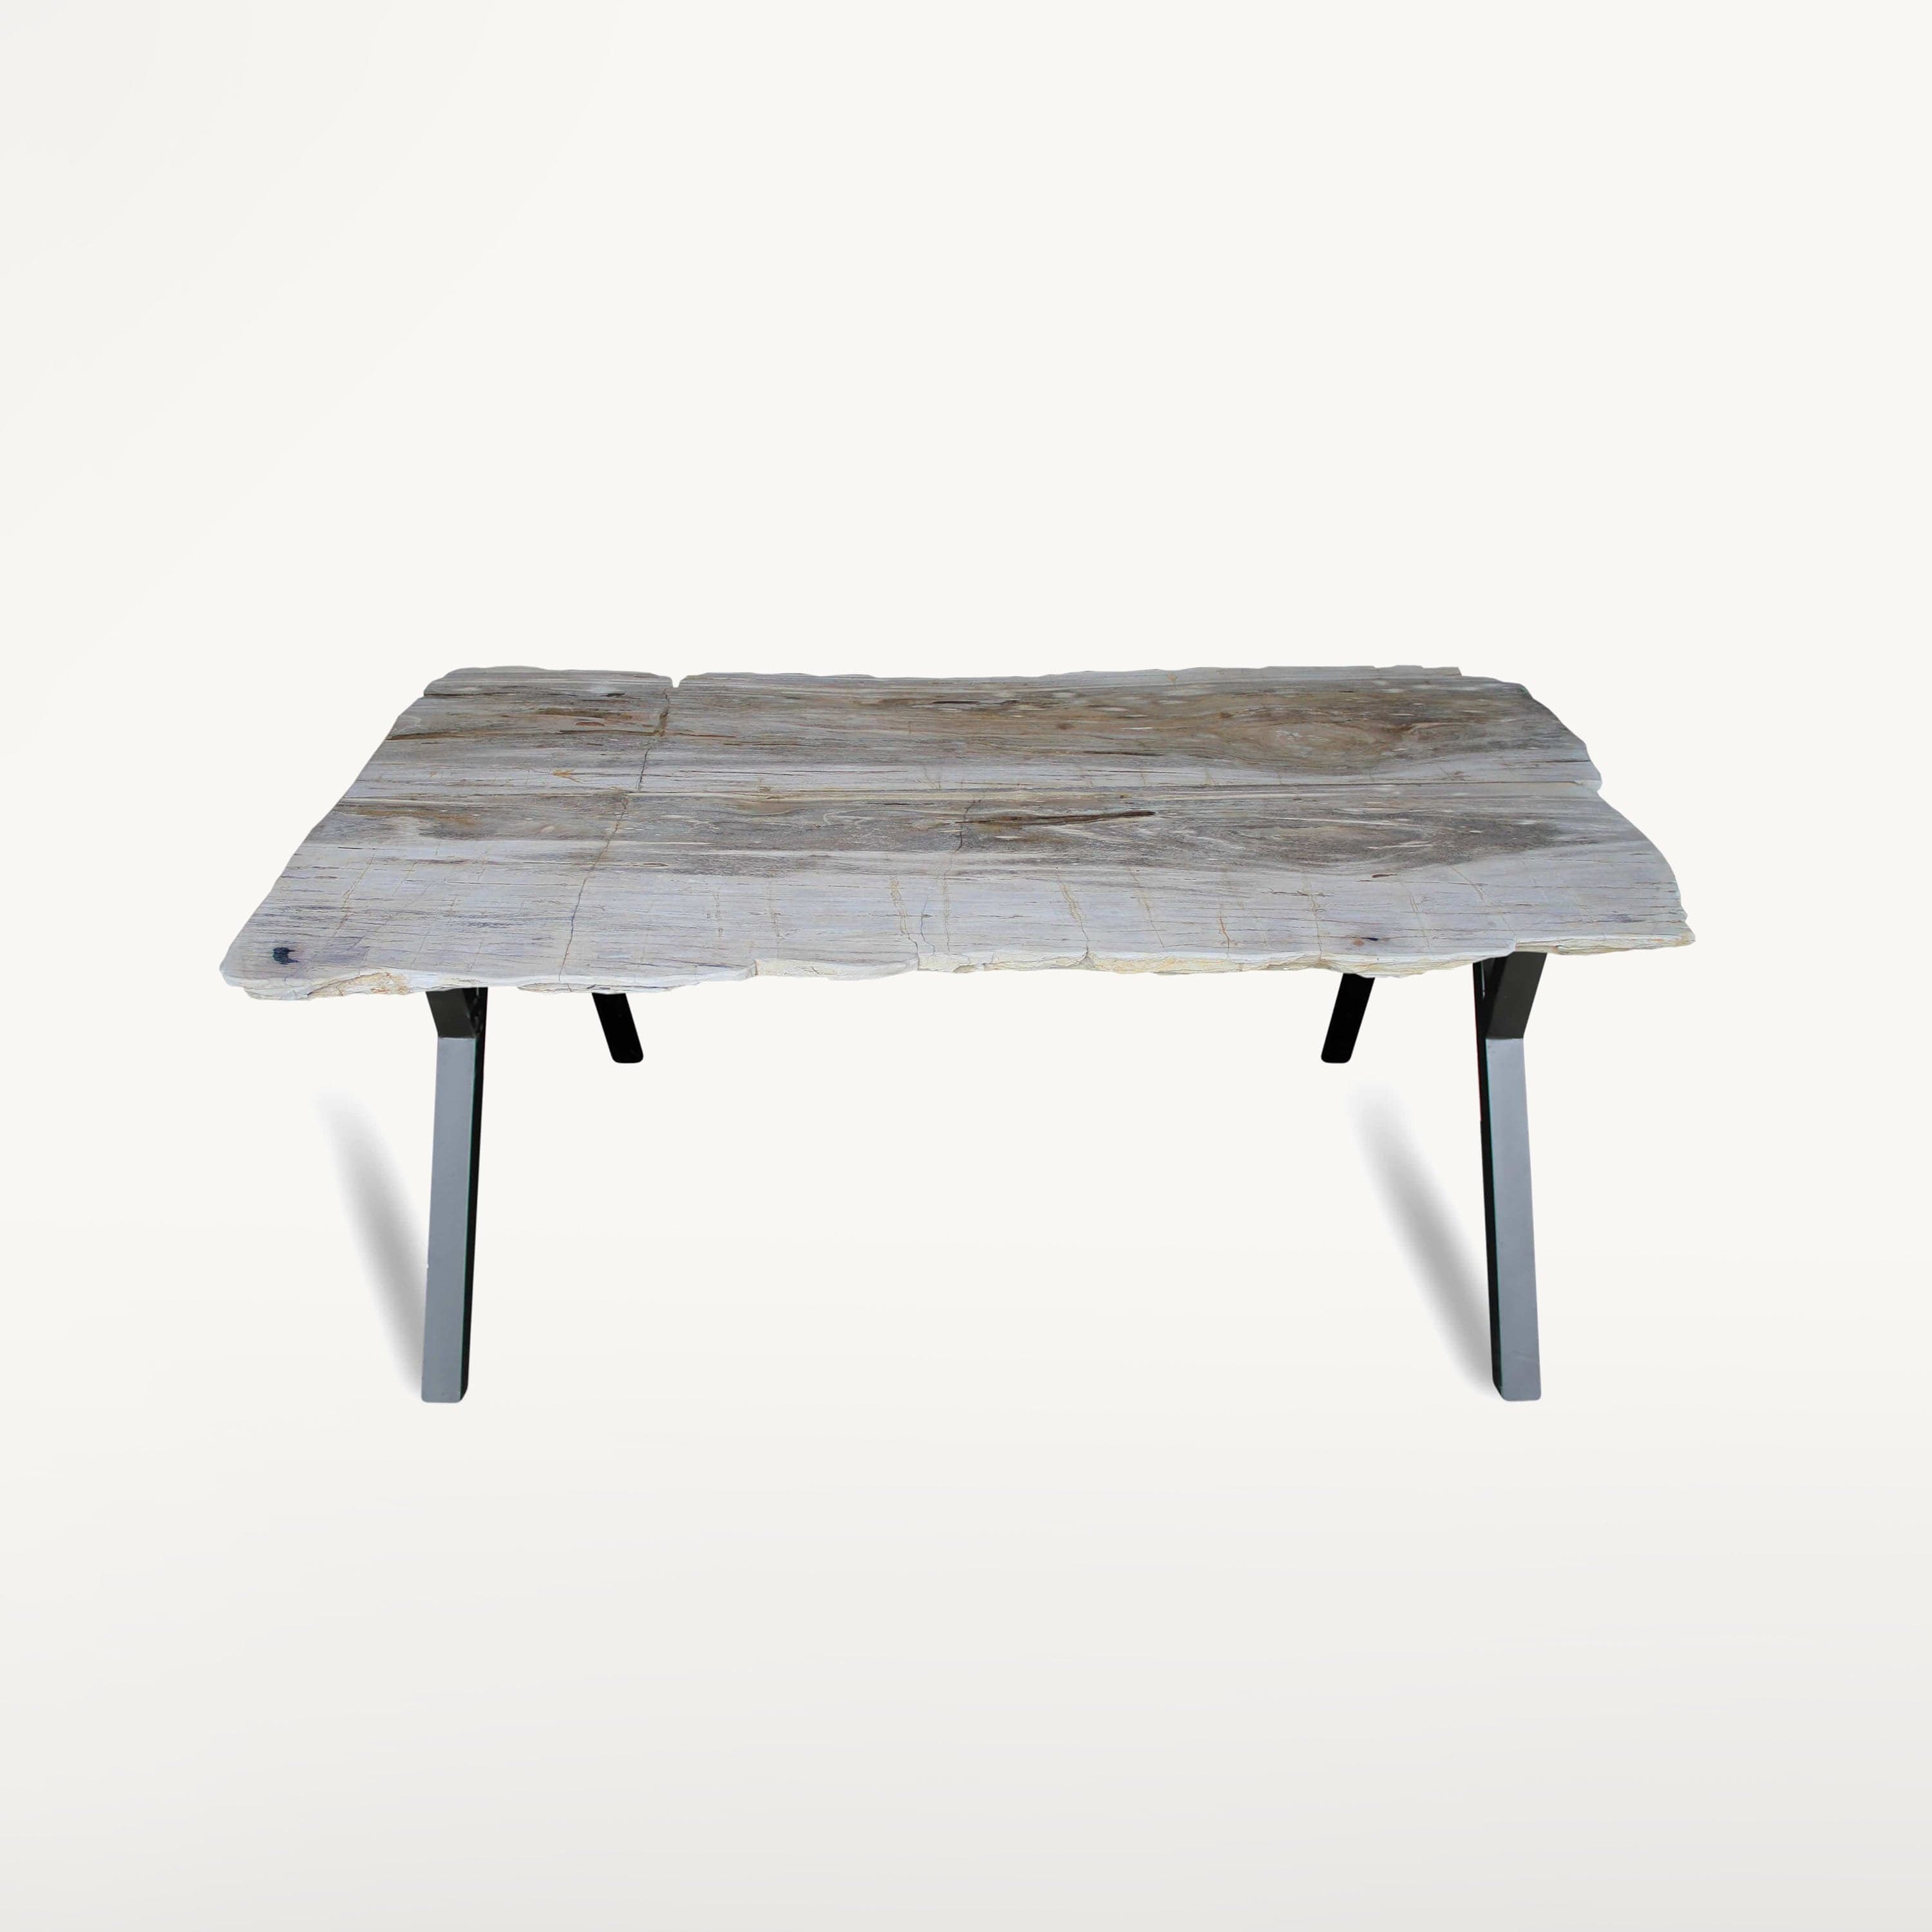 Kalifano Petrified Wood Polished Petrified Wood Table from Indonesia - 88" / 606 lbs PWR22000.001